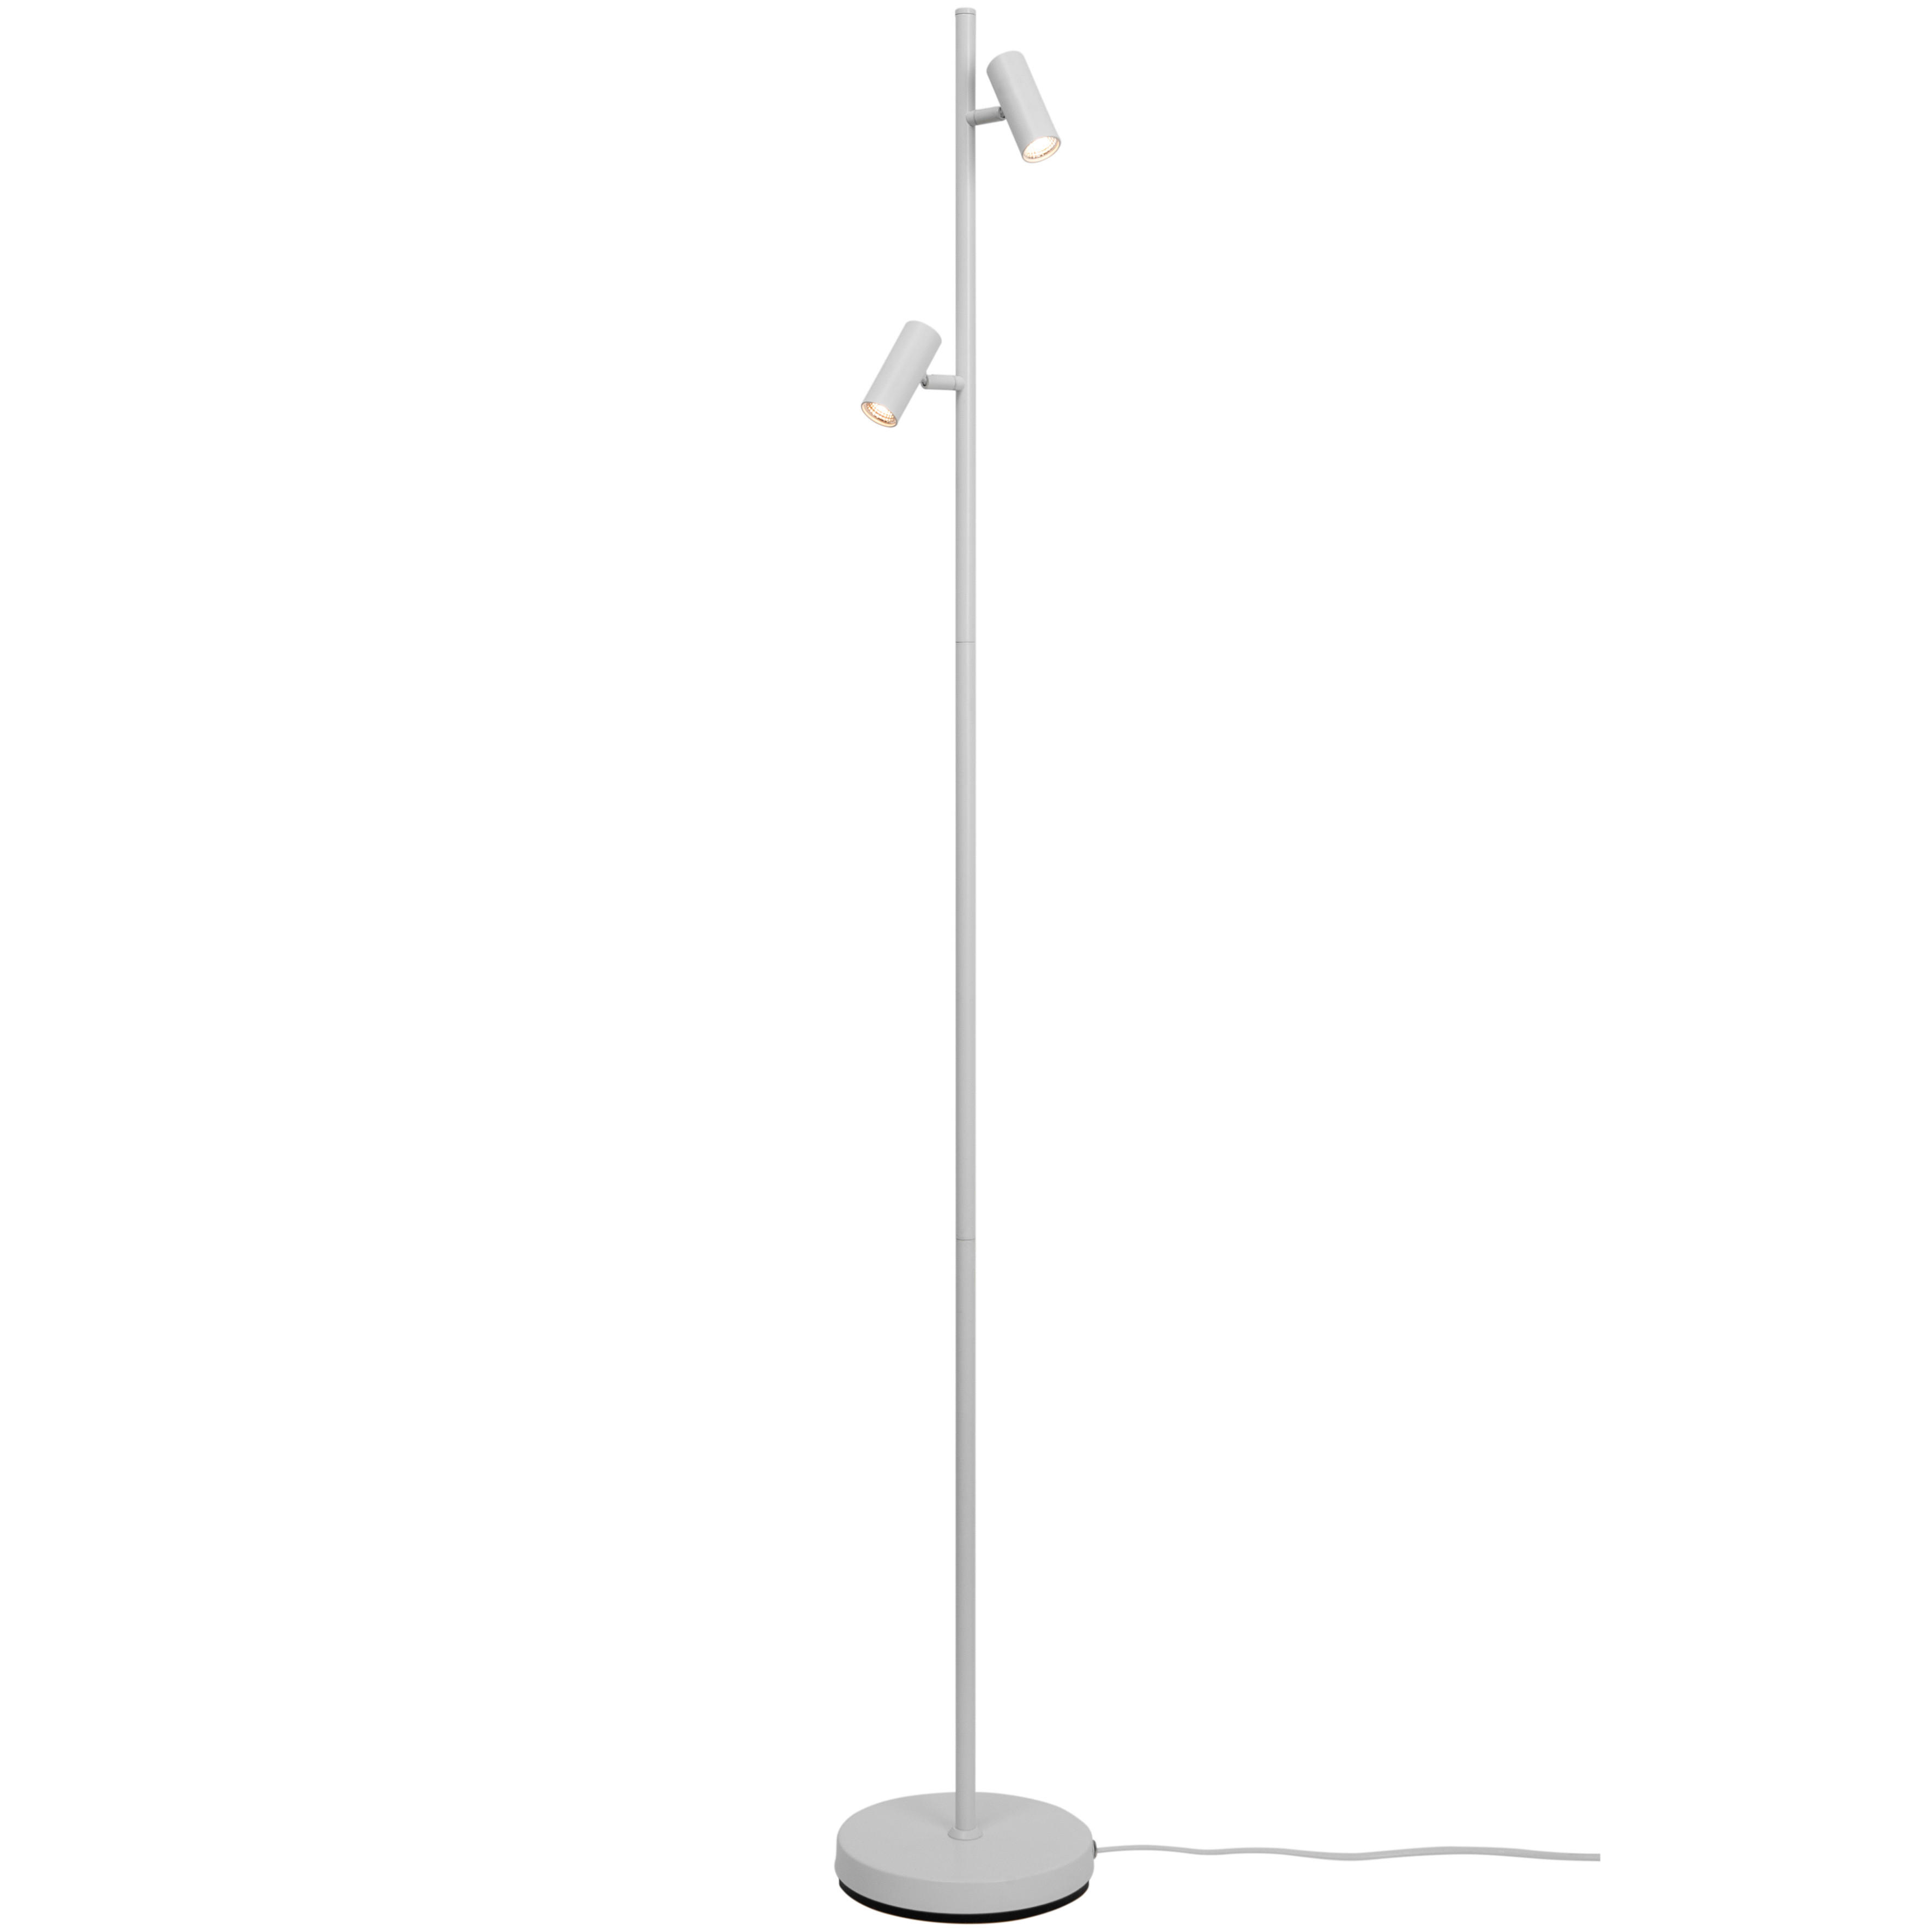 LED-STEHLEUCHTE    - Weiß, Basics, Metall (141cm) - Nordlux